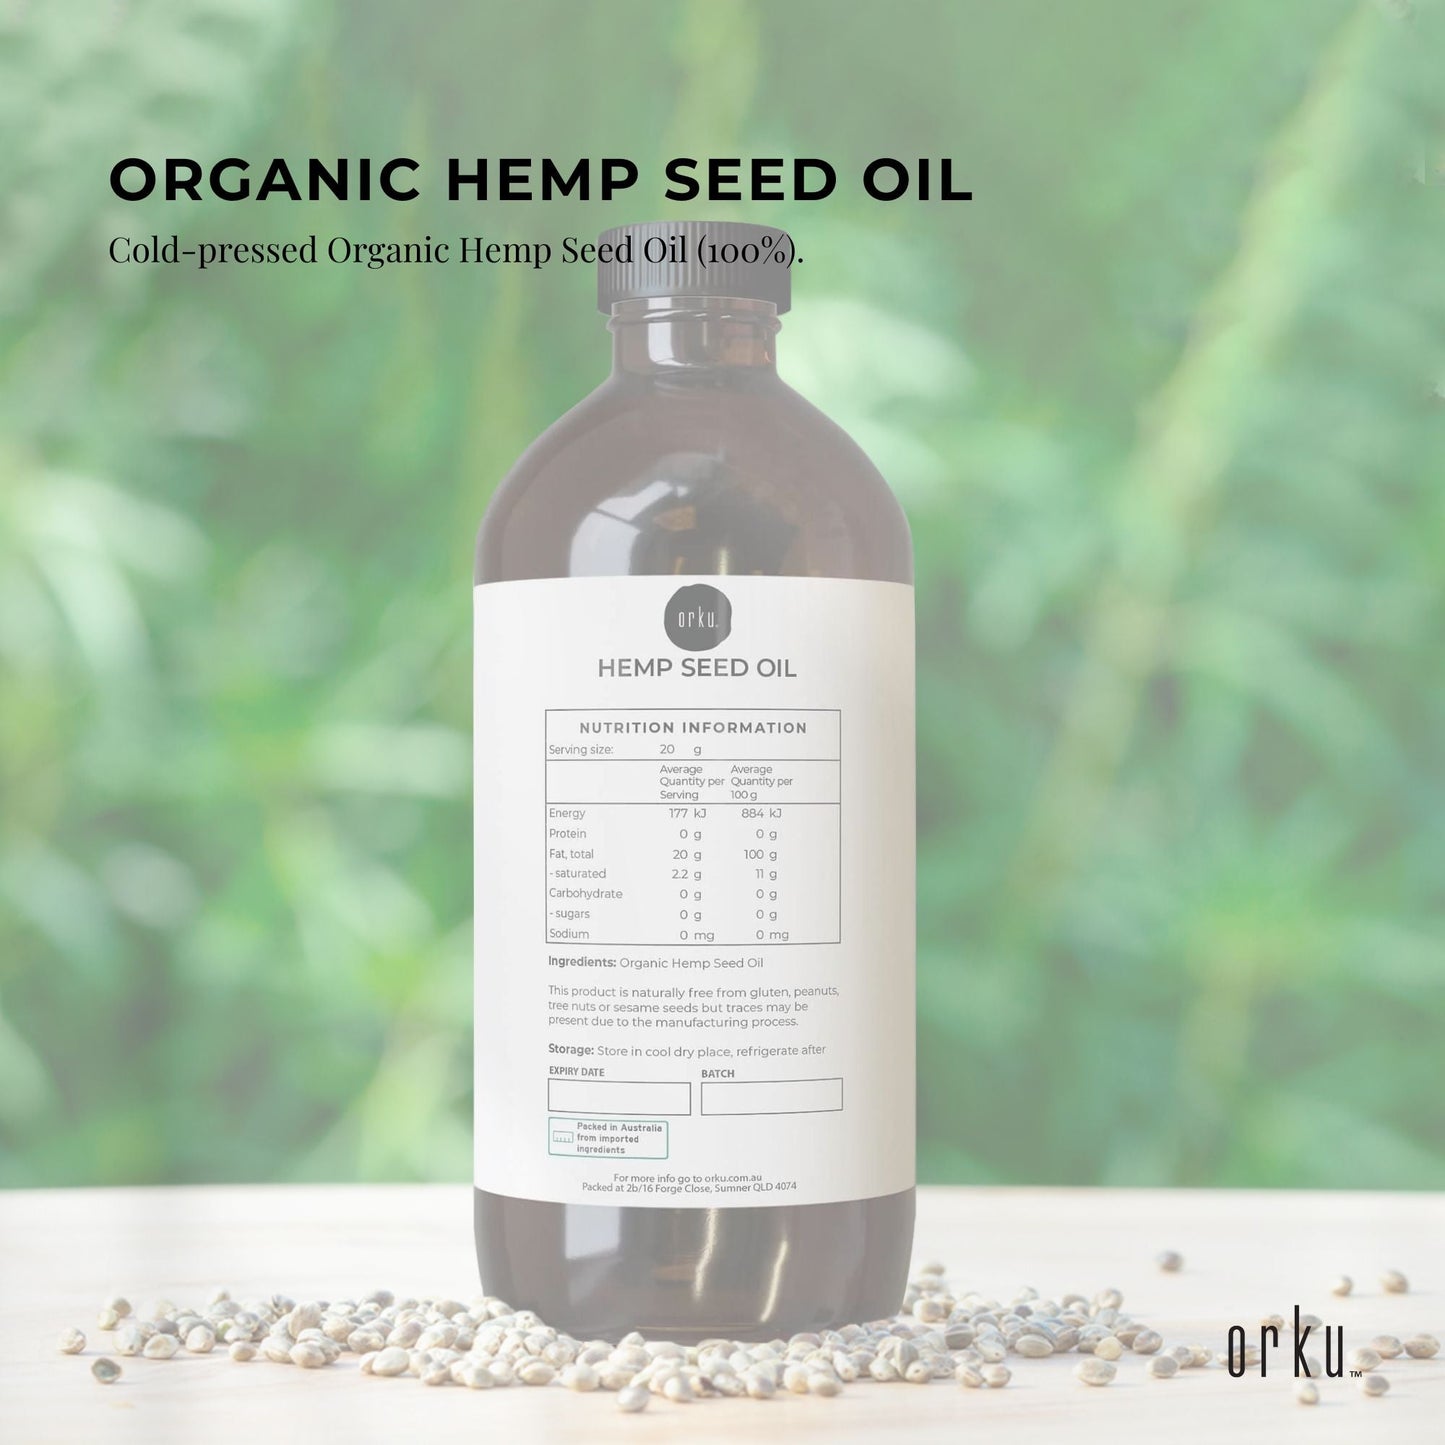 Organic Hemp Seed Oil - Food Grade Healthy Oils Foods - Bulk